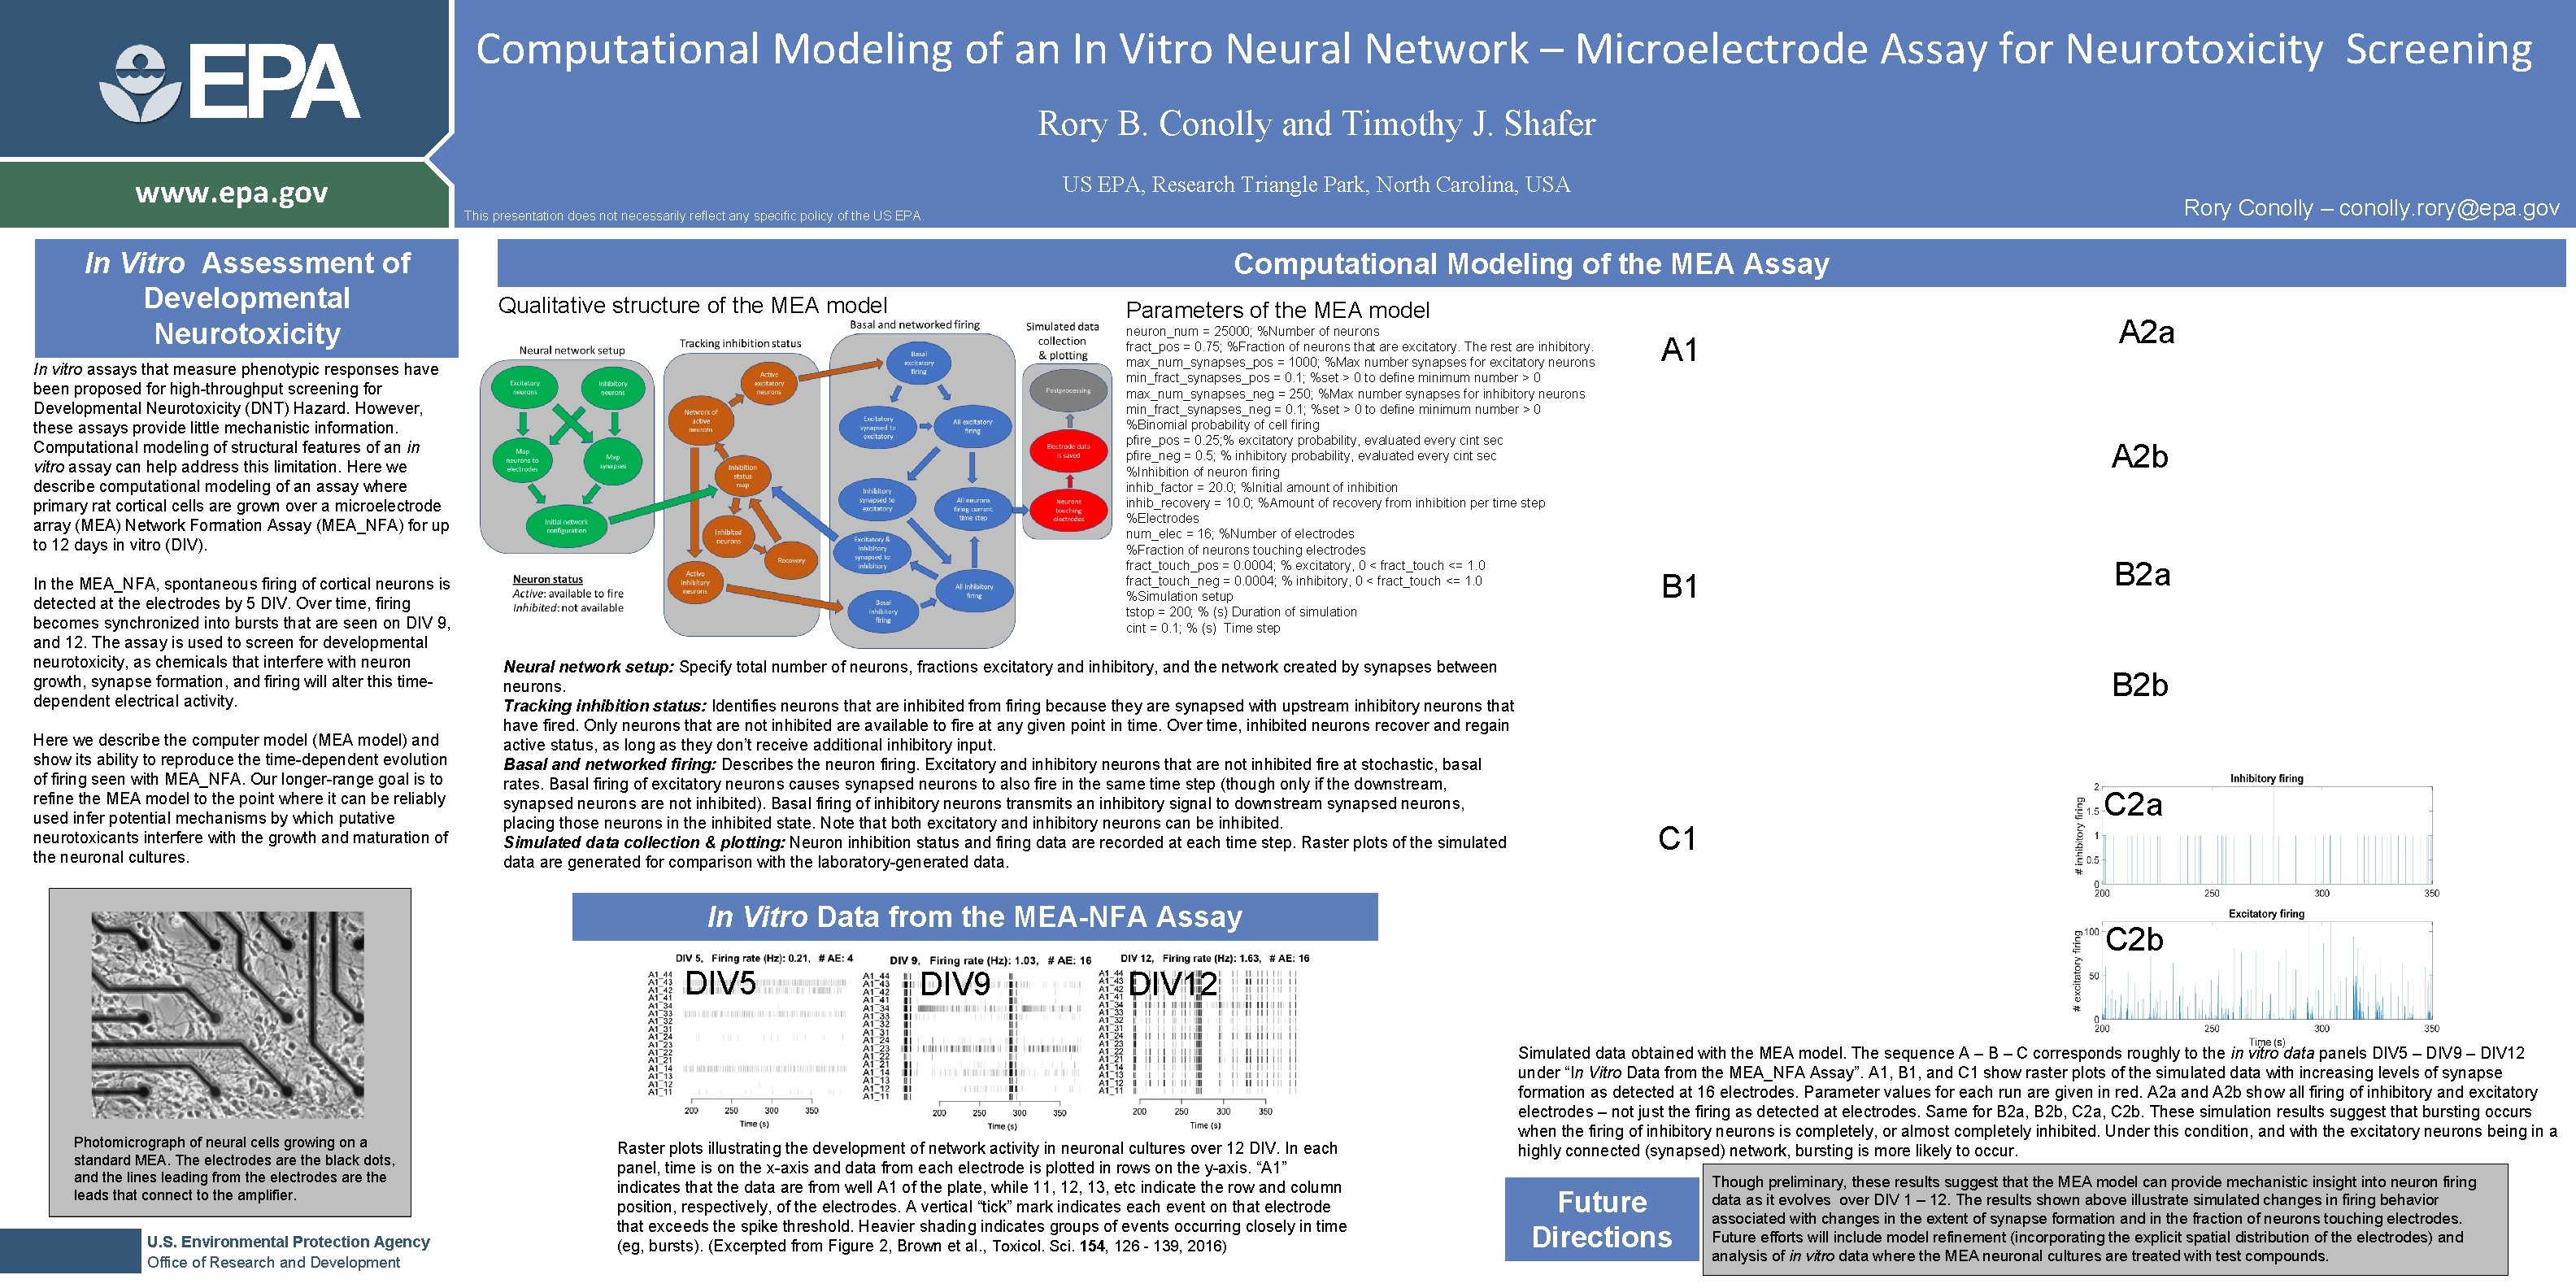 EPA www. epa. gov In Vitro Assessment of Developmental Neurotoxicity Computational Modeling of an